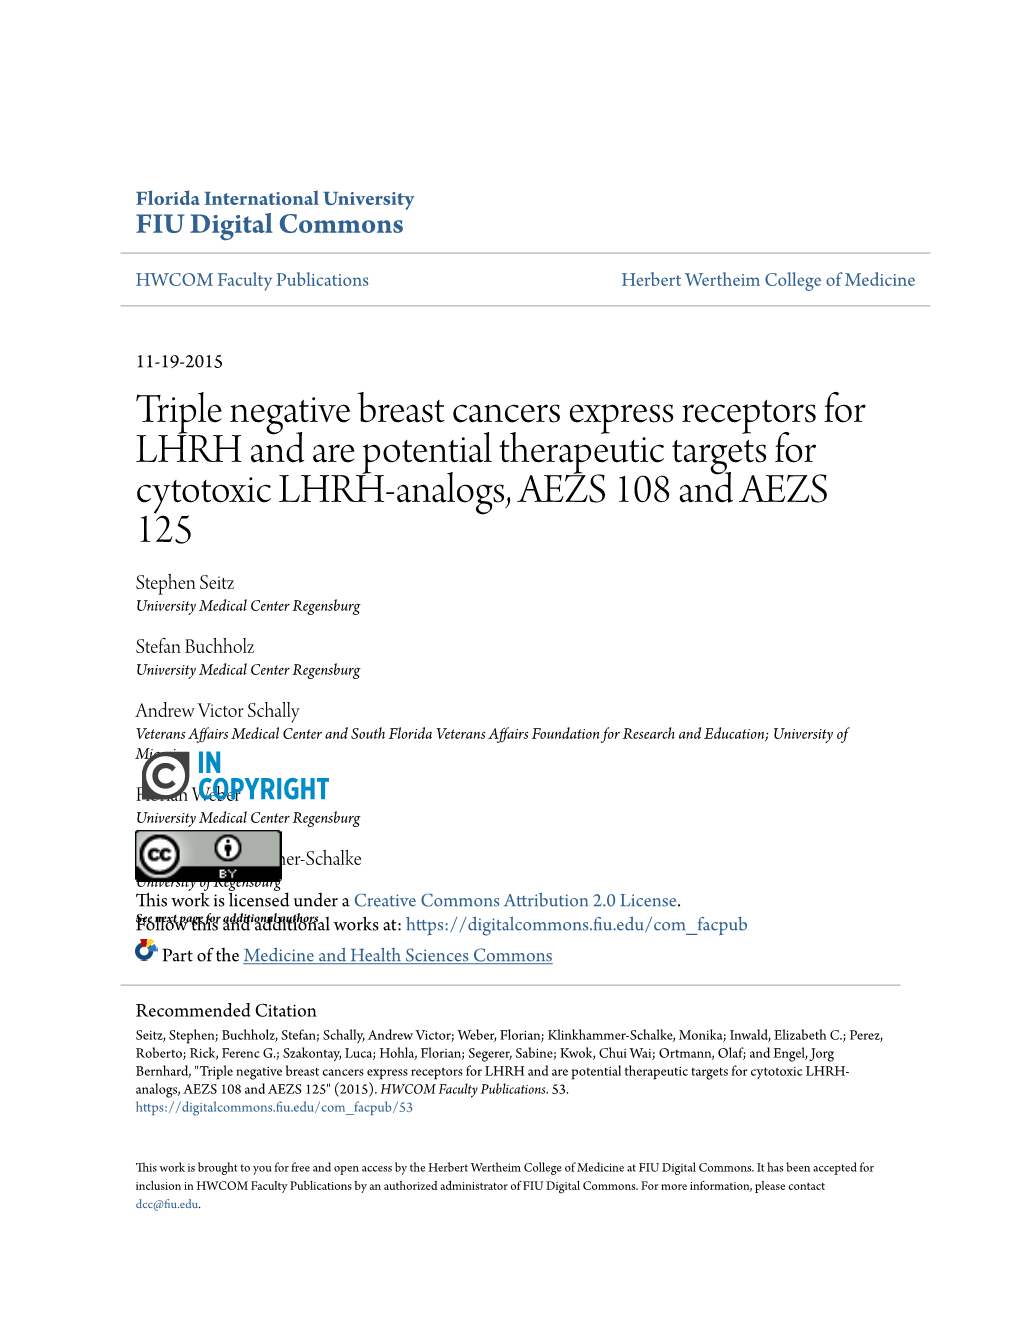 Triple Negative Breast Cancers Express